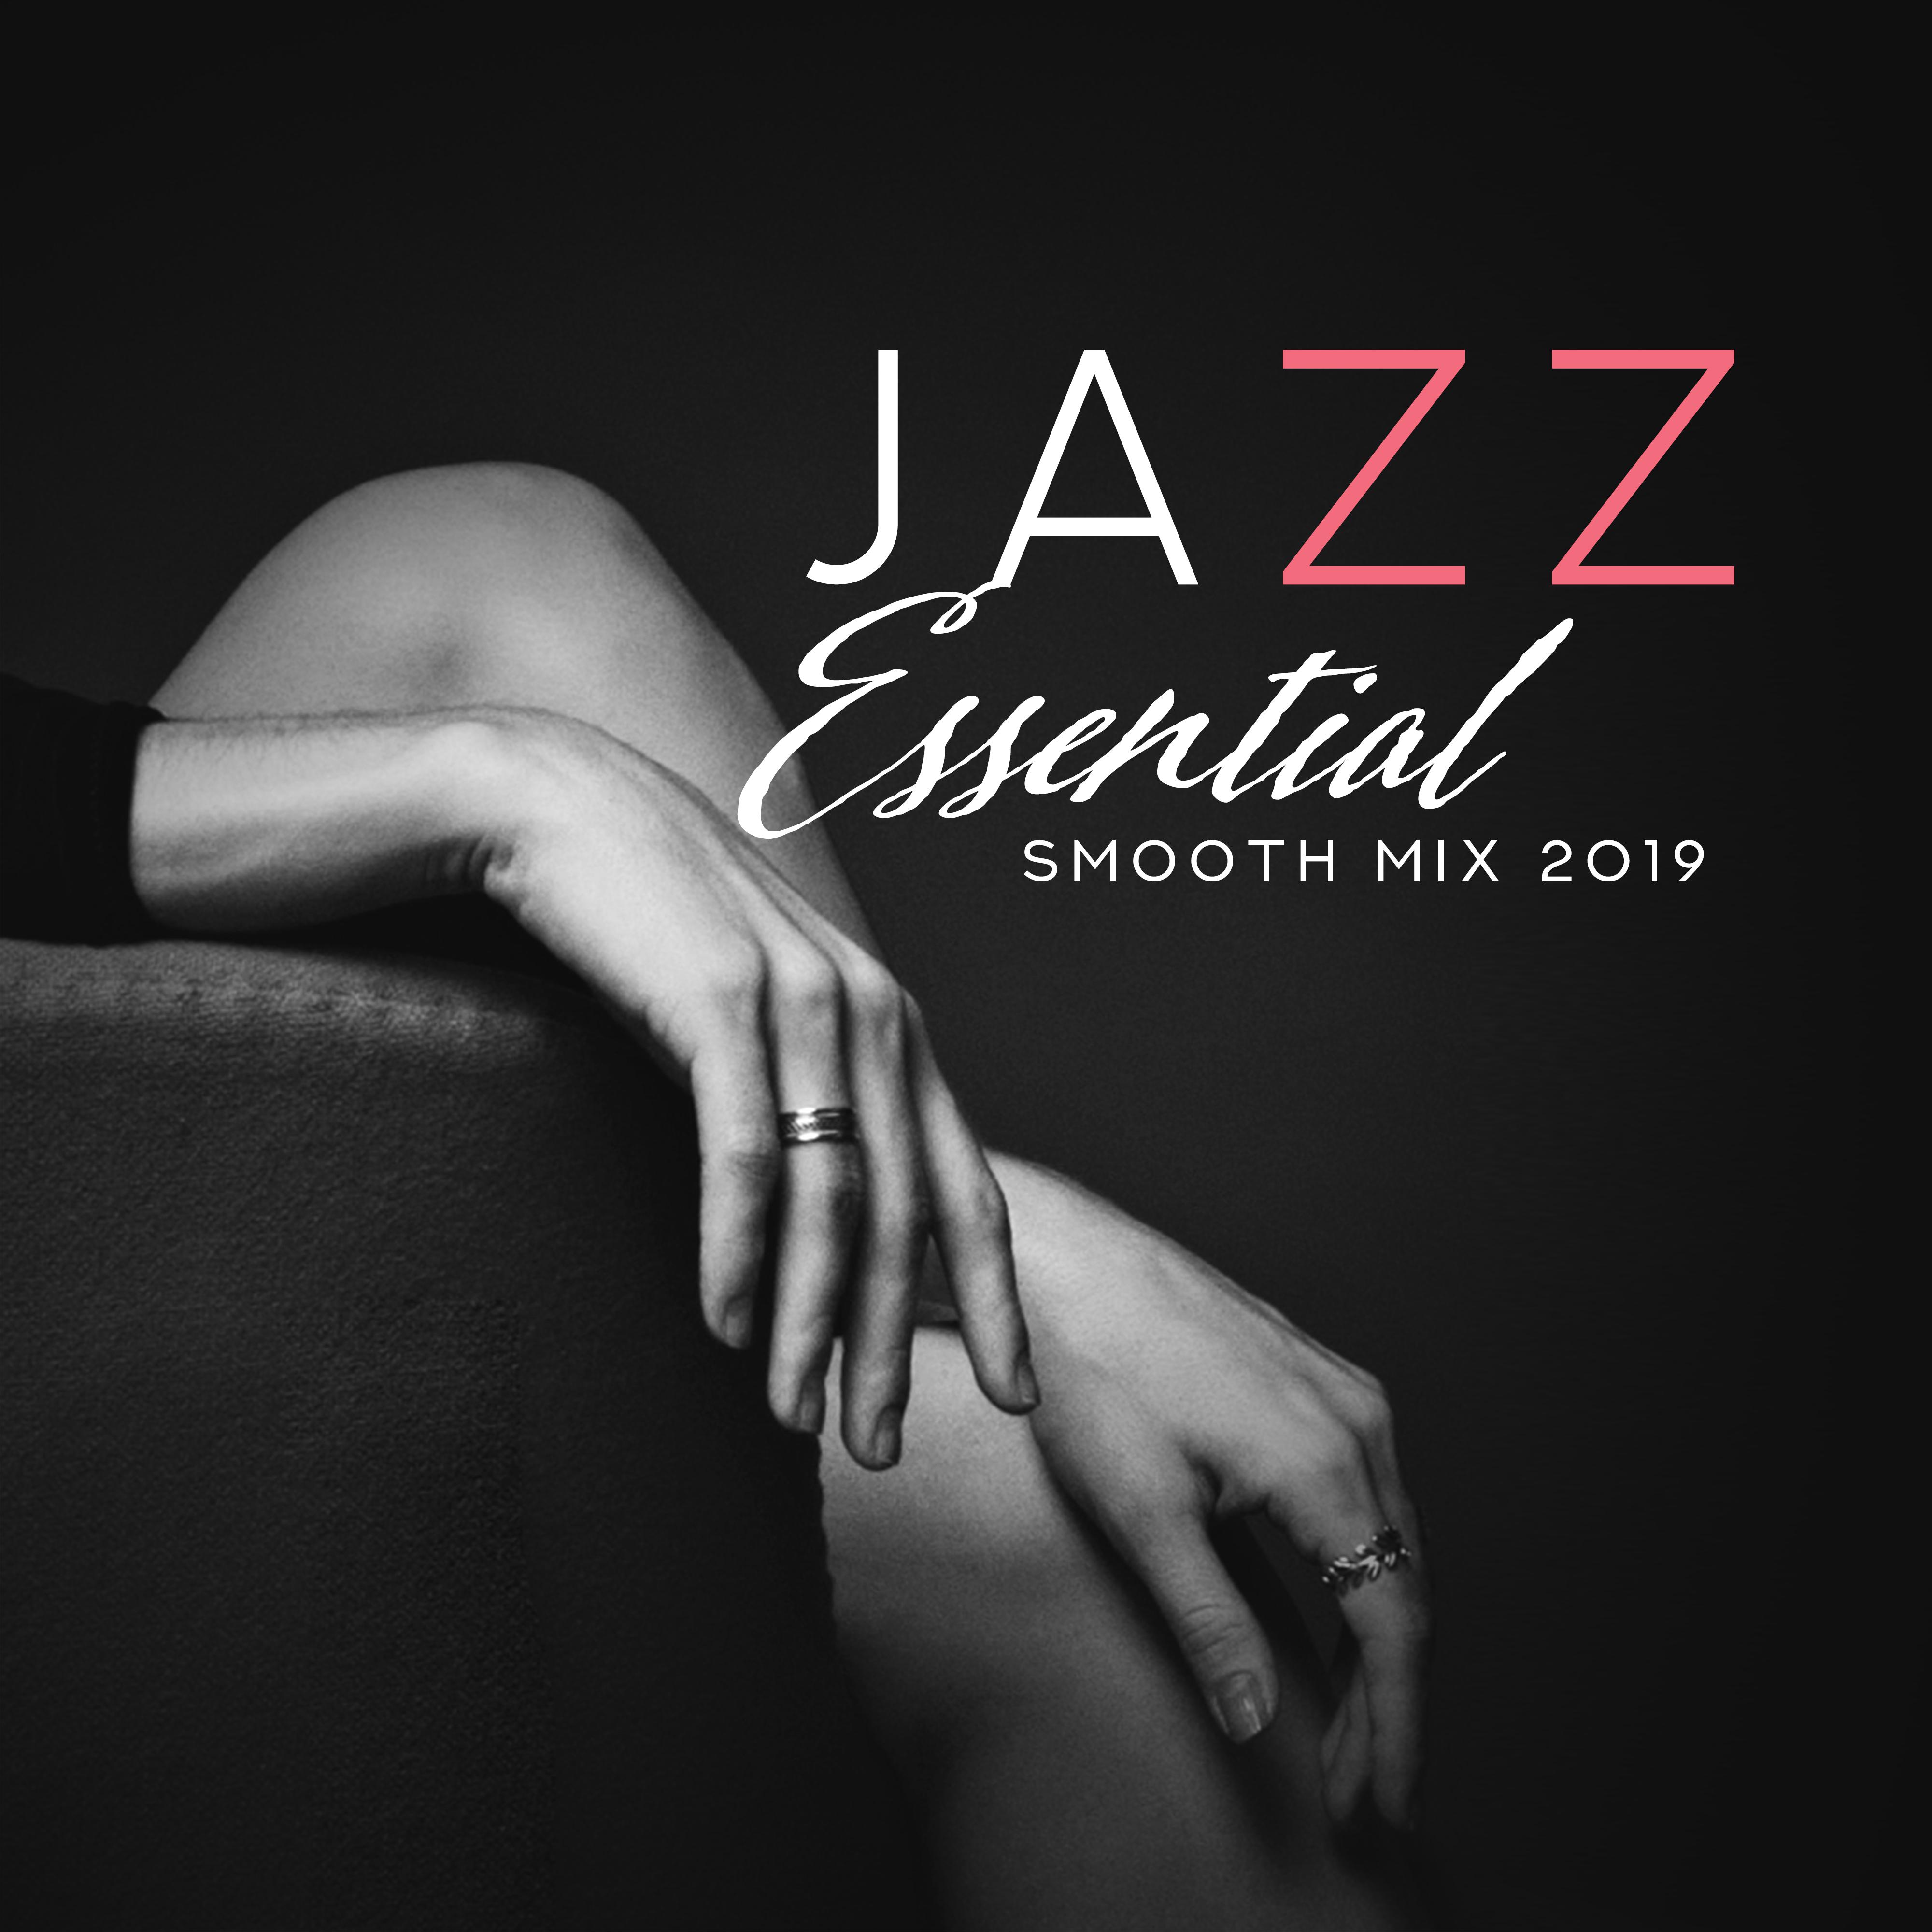 Jazz Essential Smooth Mix 2019